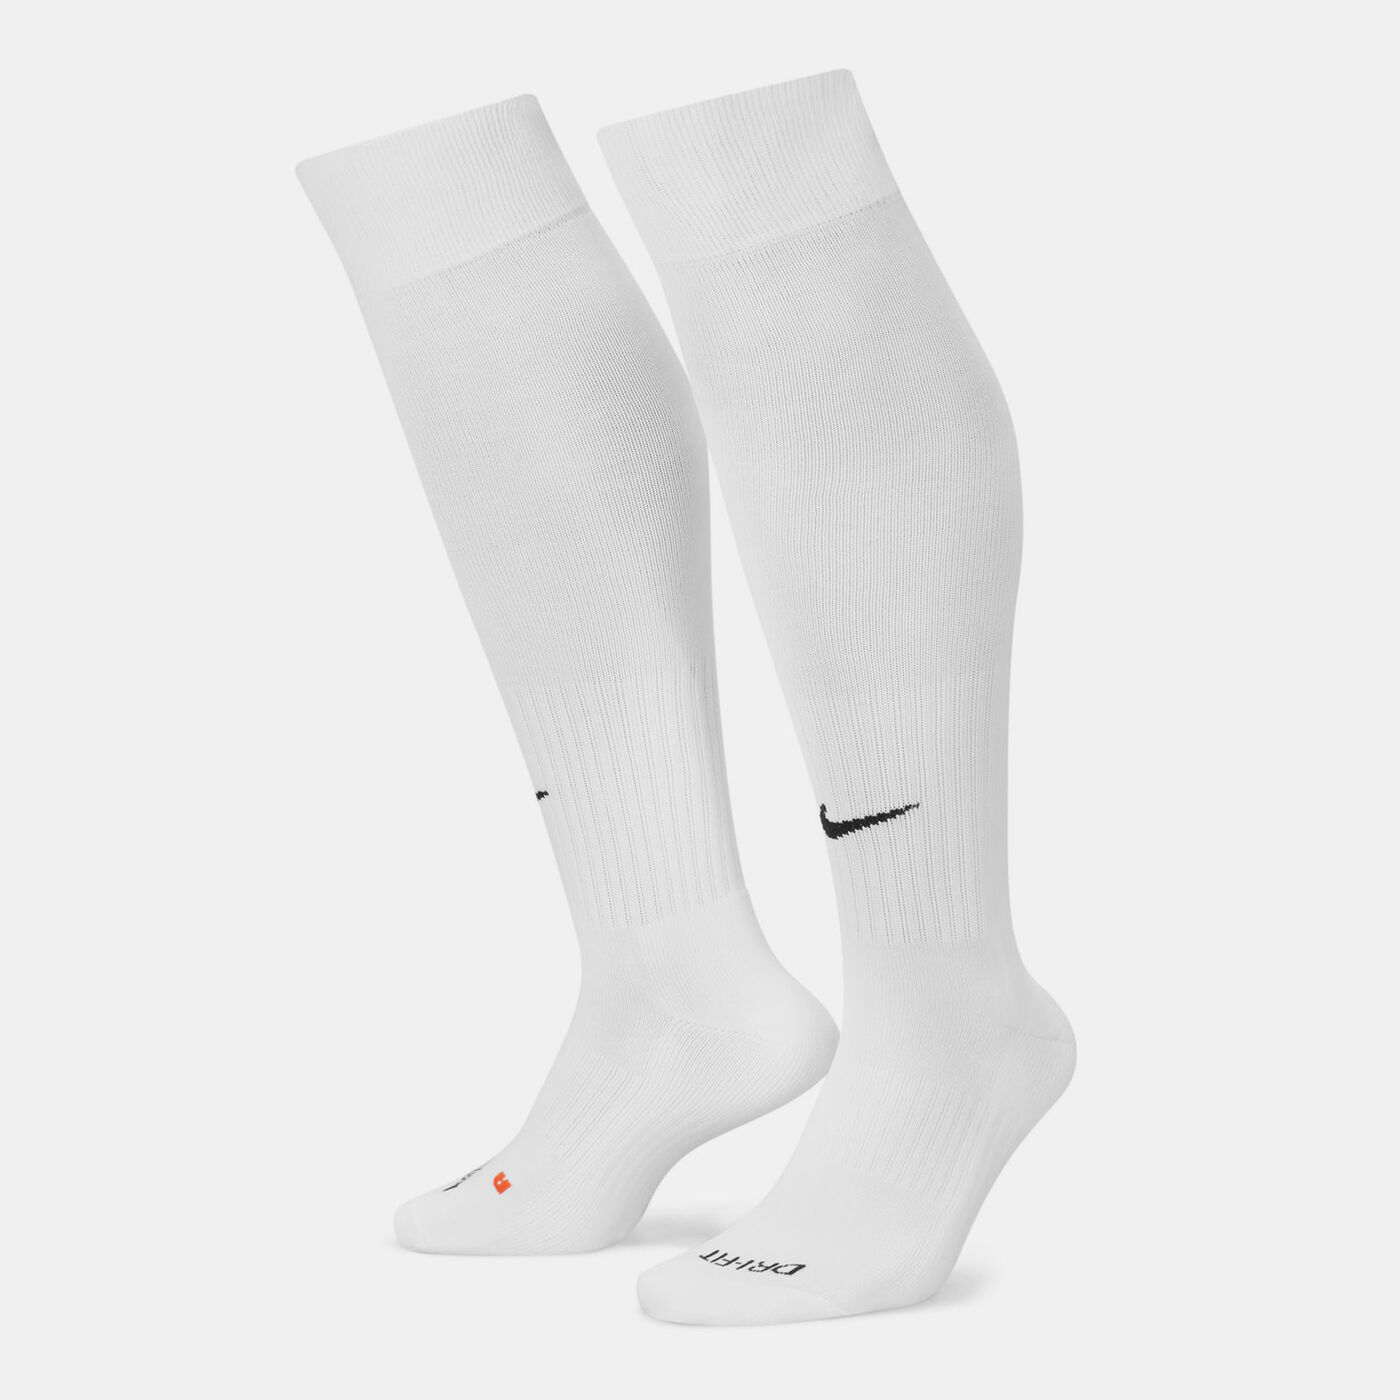 Classic 2 Cushioned Over-the-Calf Football Socks